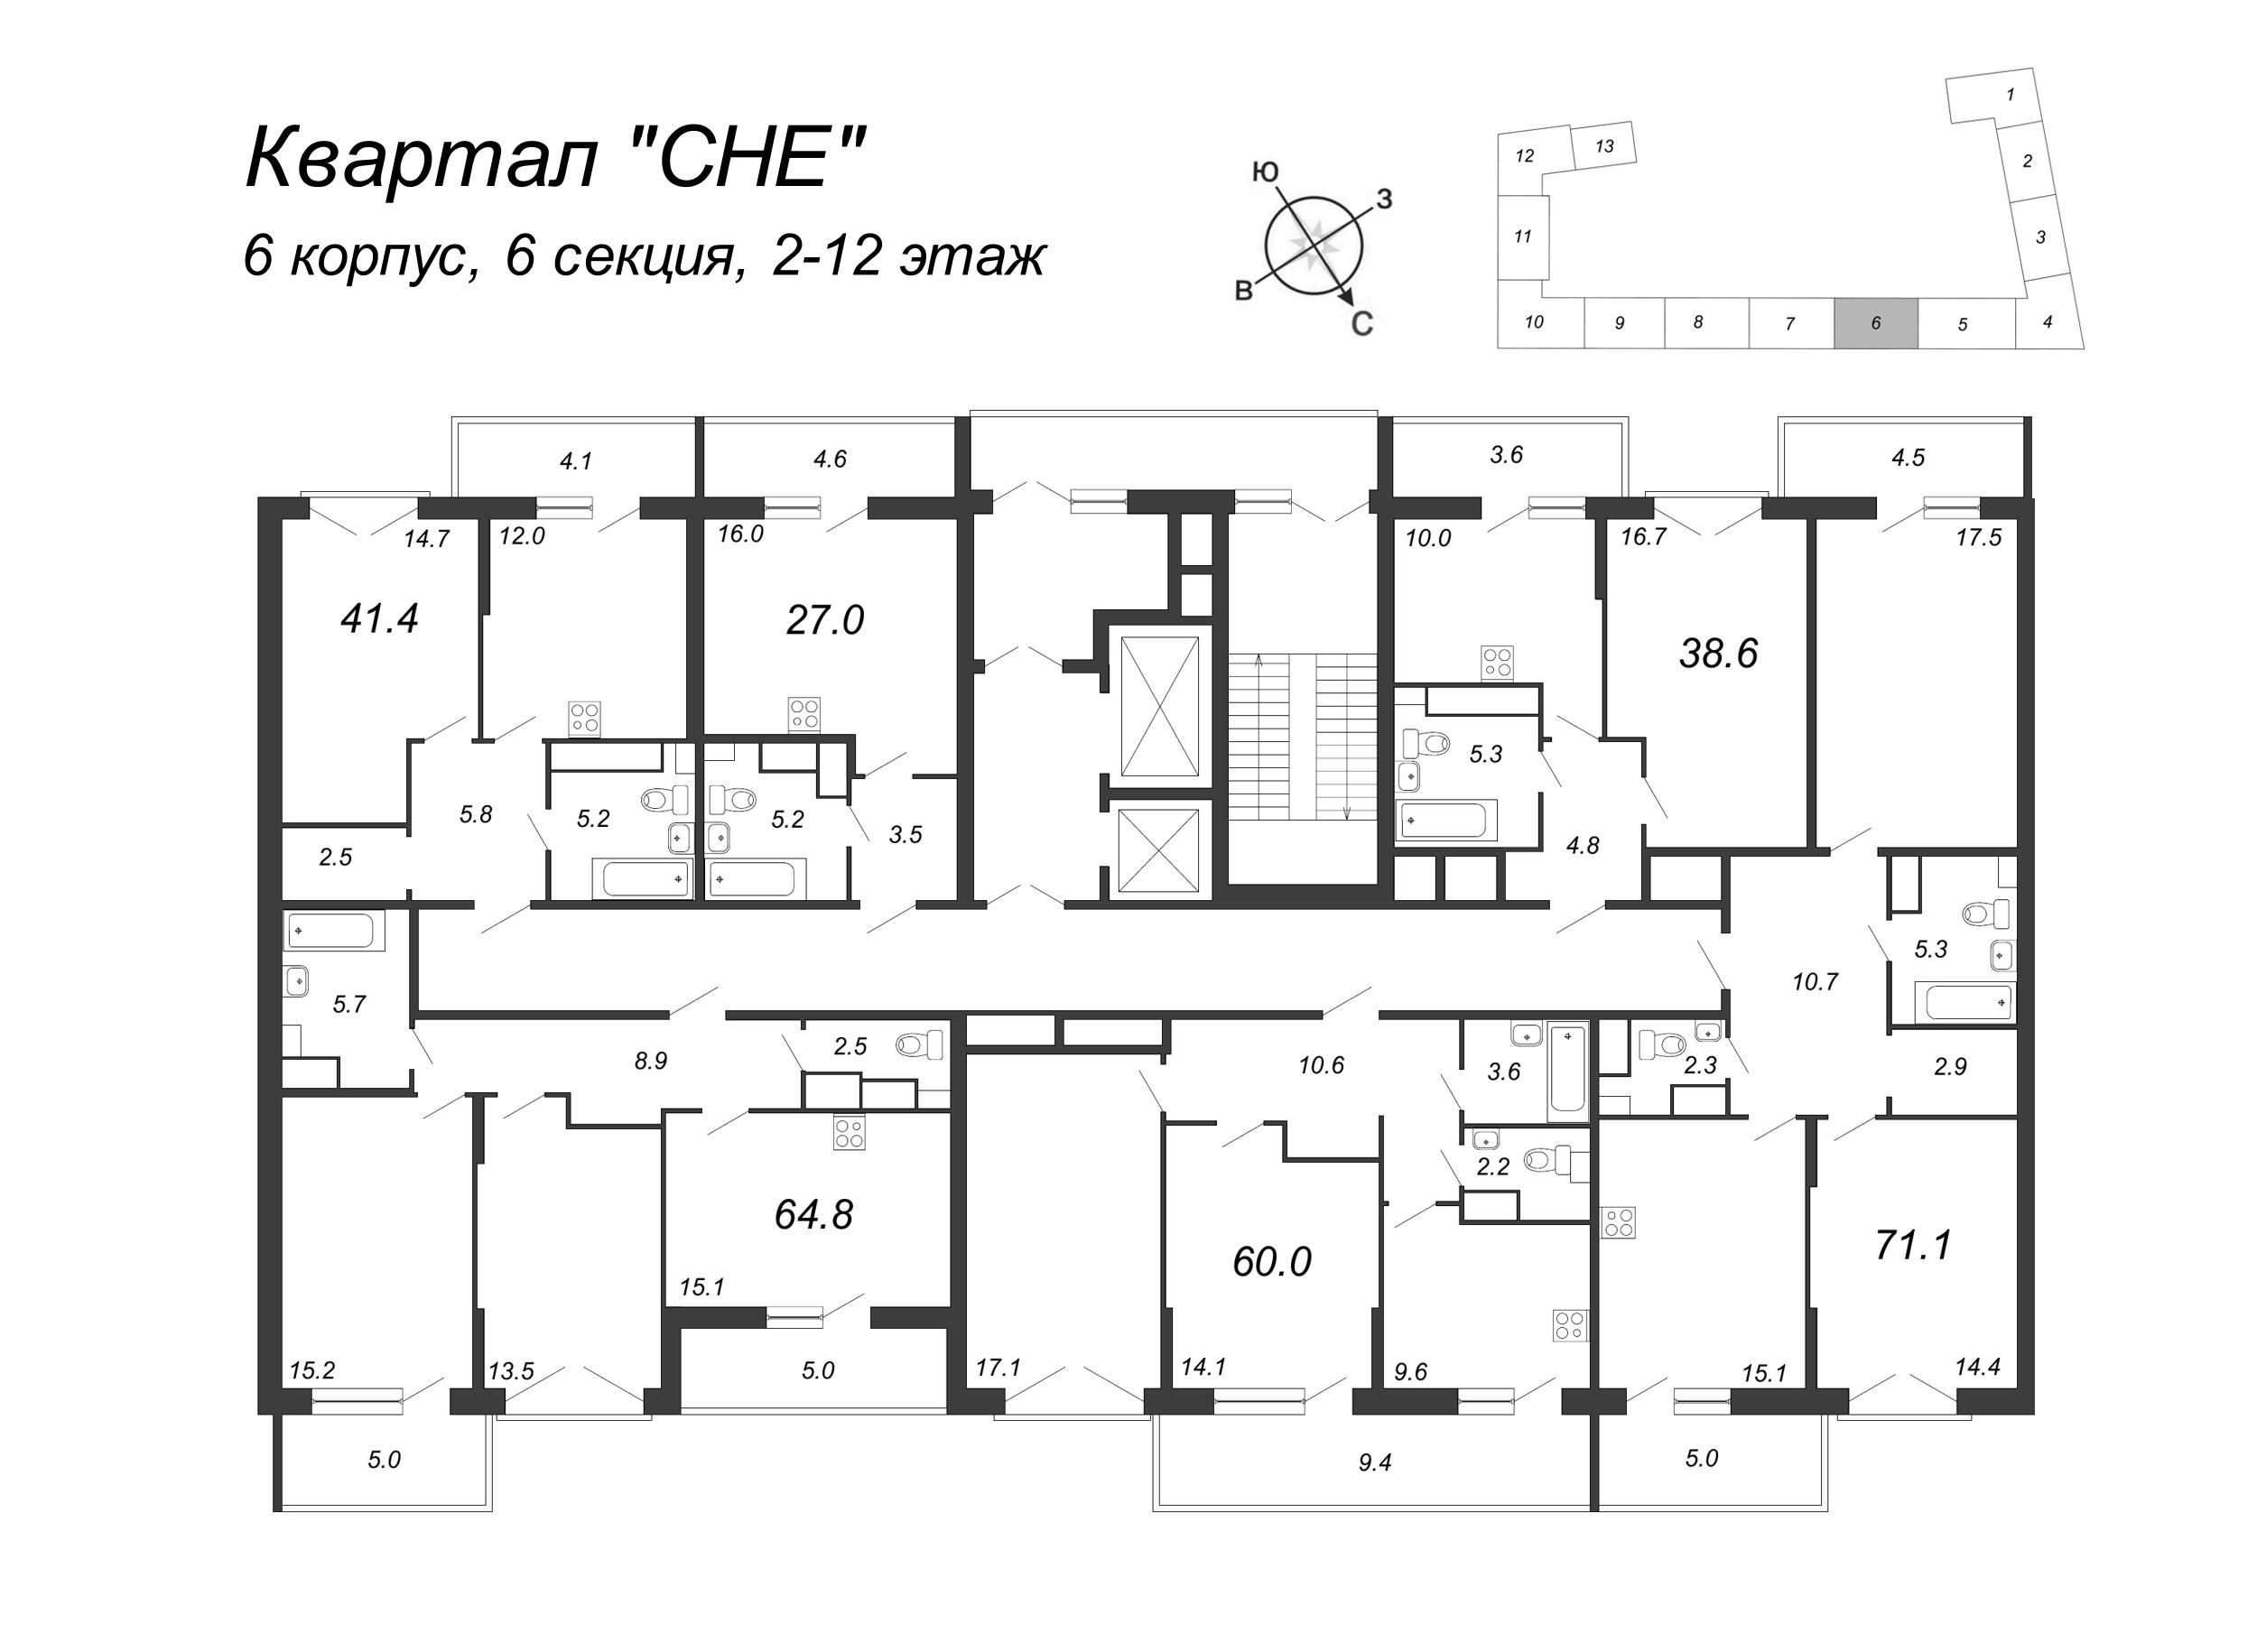 Квартира-студия, 27.2 м² в ЖК "Квартал Che" - планировка этажа